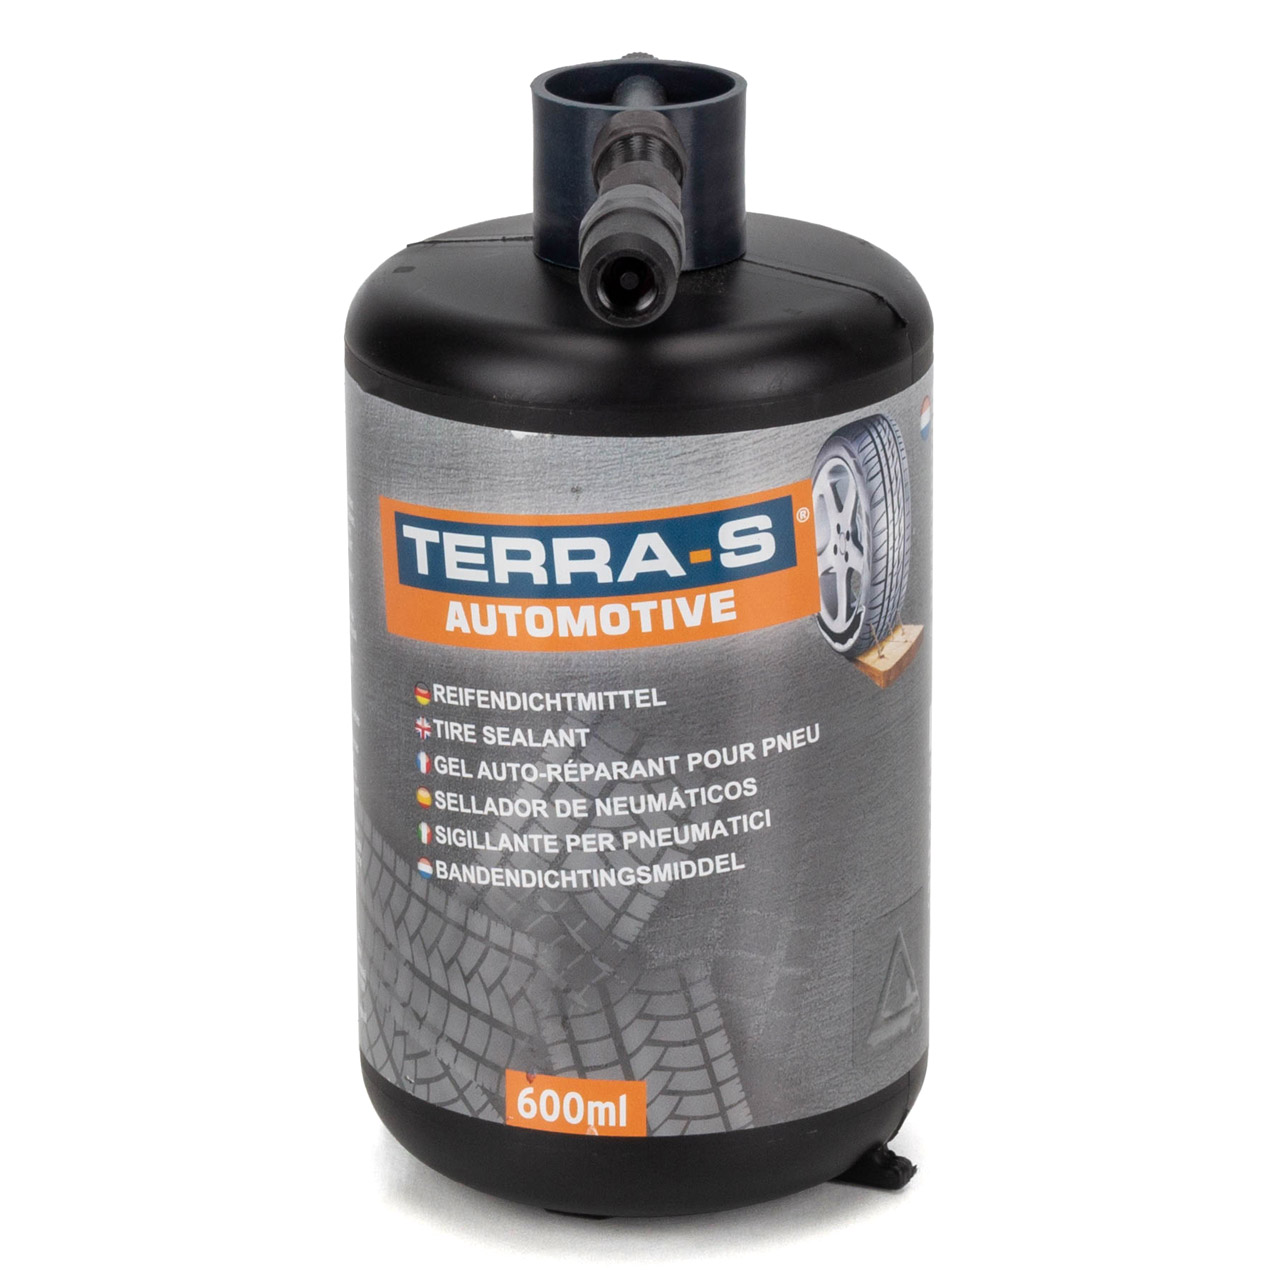 TERRA S Reifenreparaturset / Autopanne / Erste Hilfe - 1052900